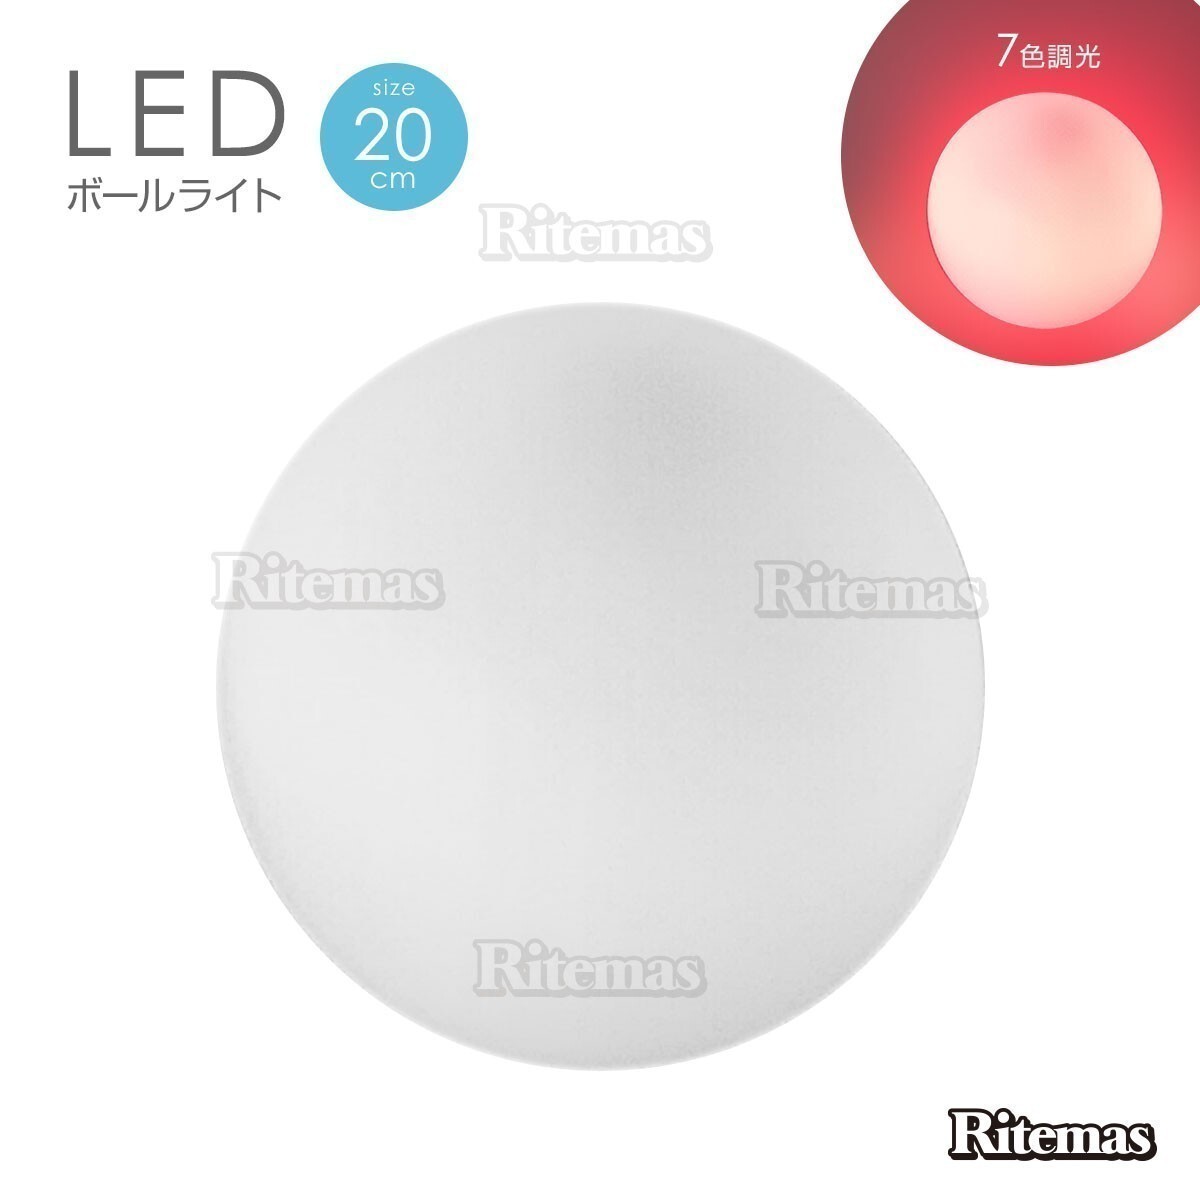 LEDボール 20cm スピーカー Bluetooth IP65 防水 ライトボール LED イルミネーション フォトジェニック 7色調光 リモコン付き 充電式